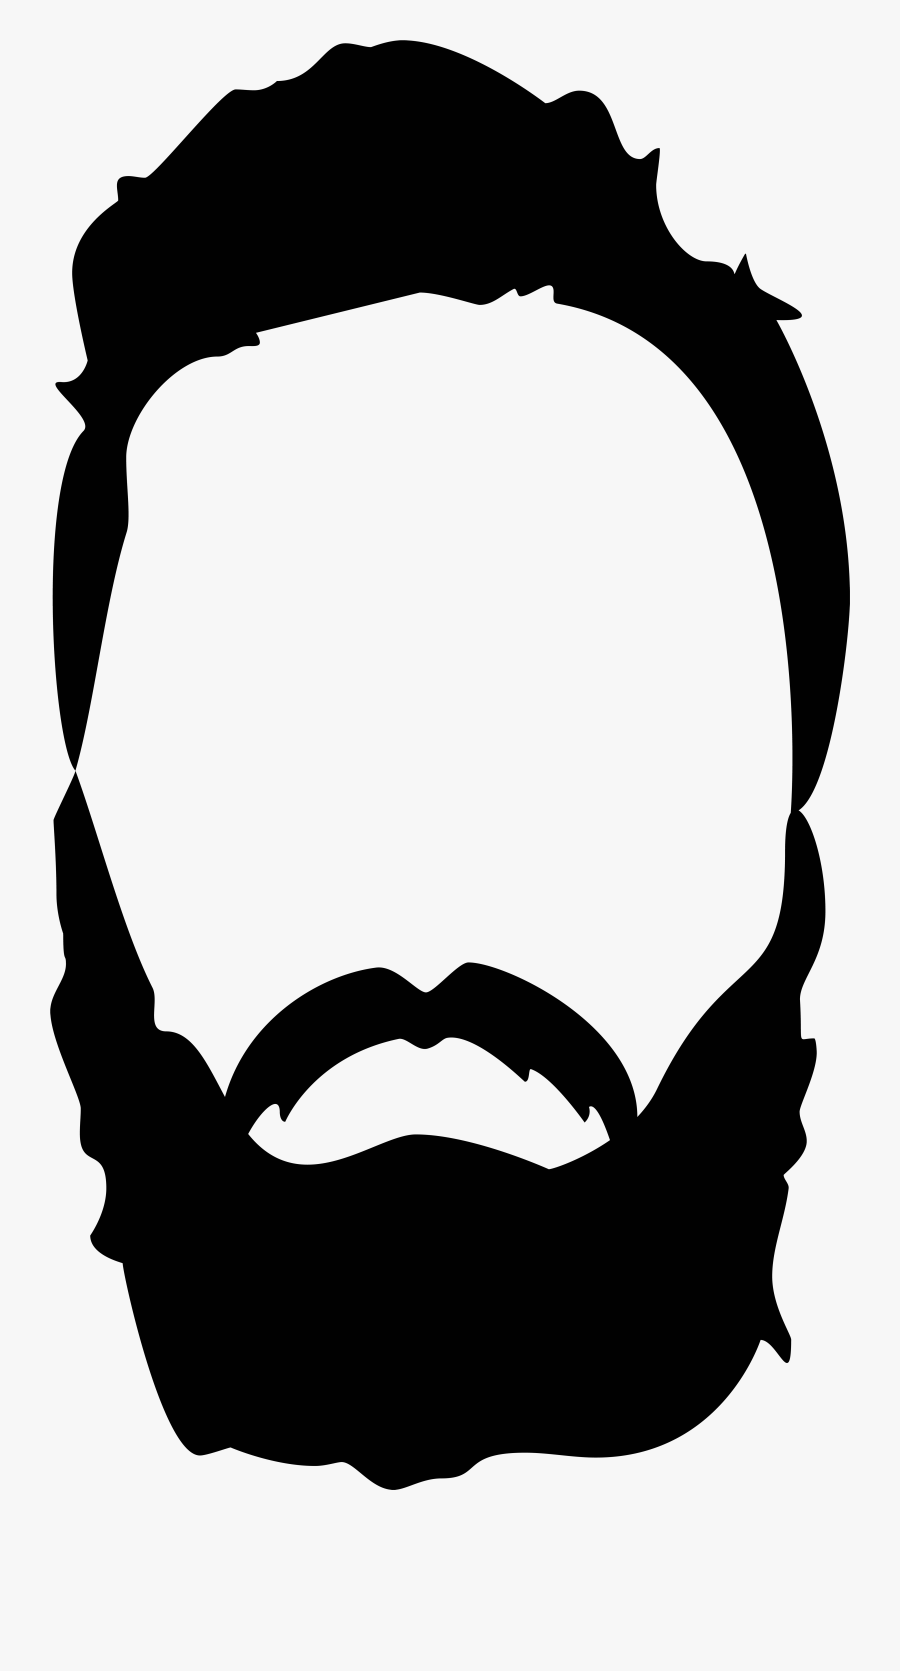 Mustache Png High Resolution - Mustache And Beard Clipart, Transparent Clipart